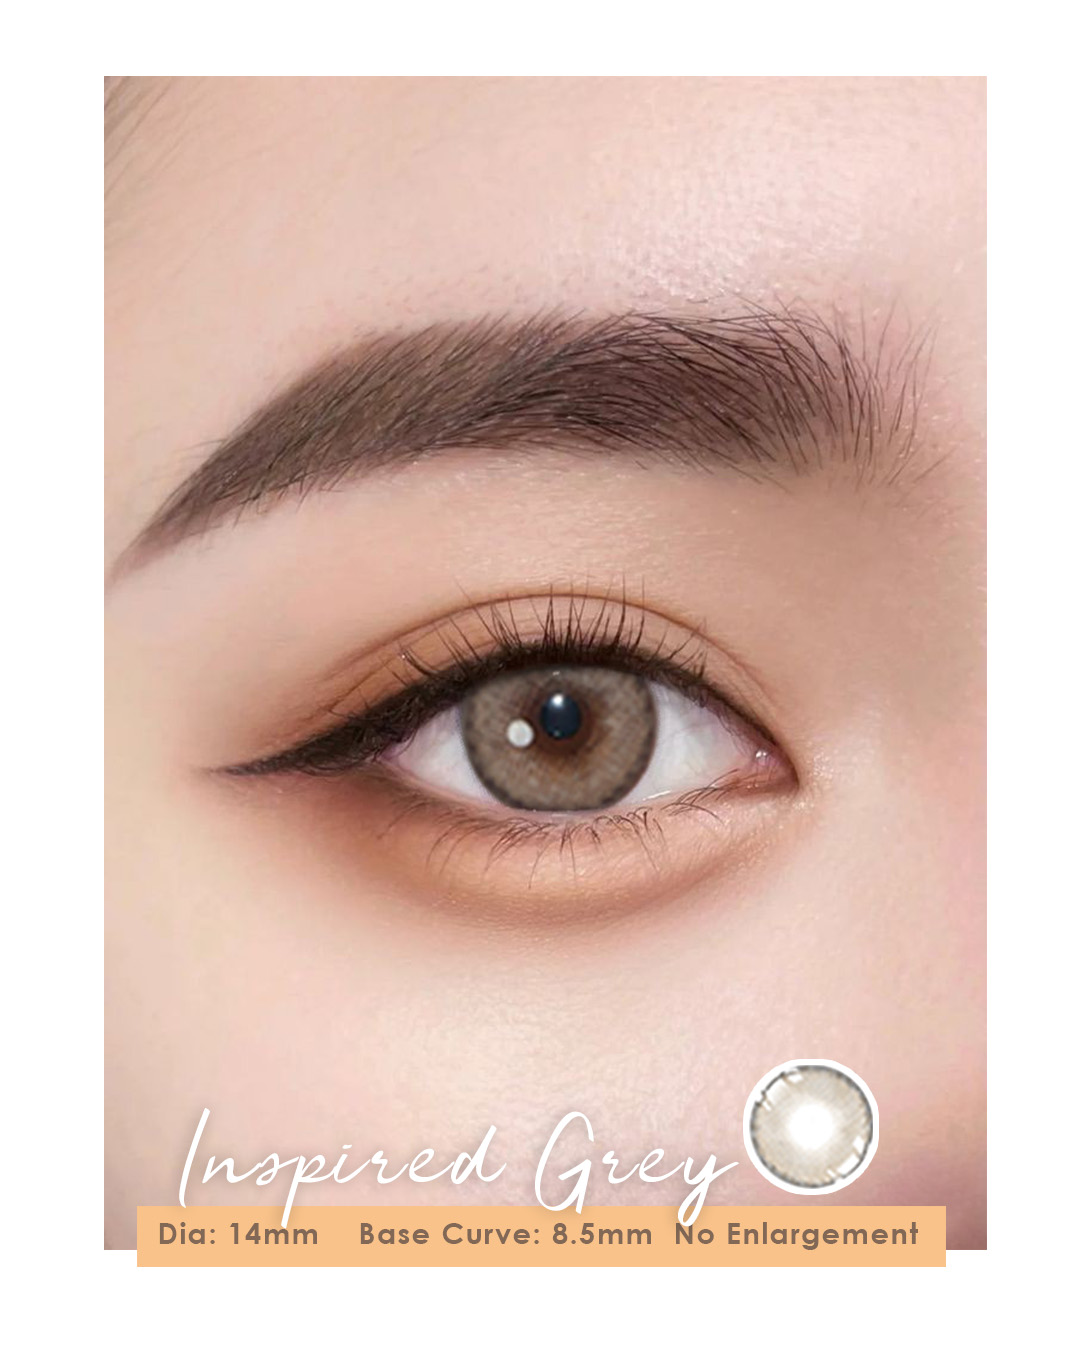 Inspired grey focus  eyes